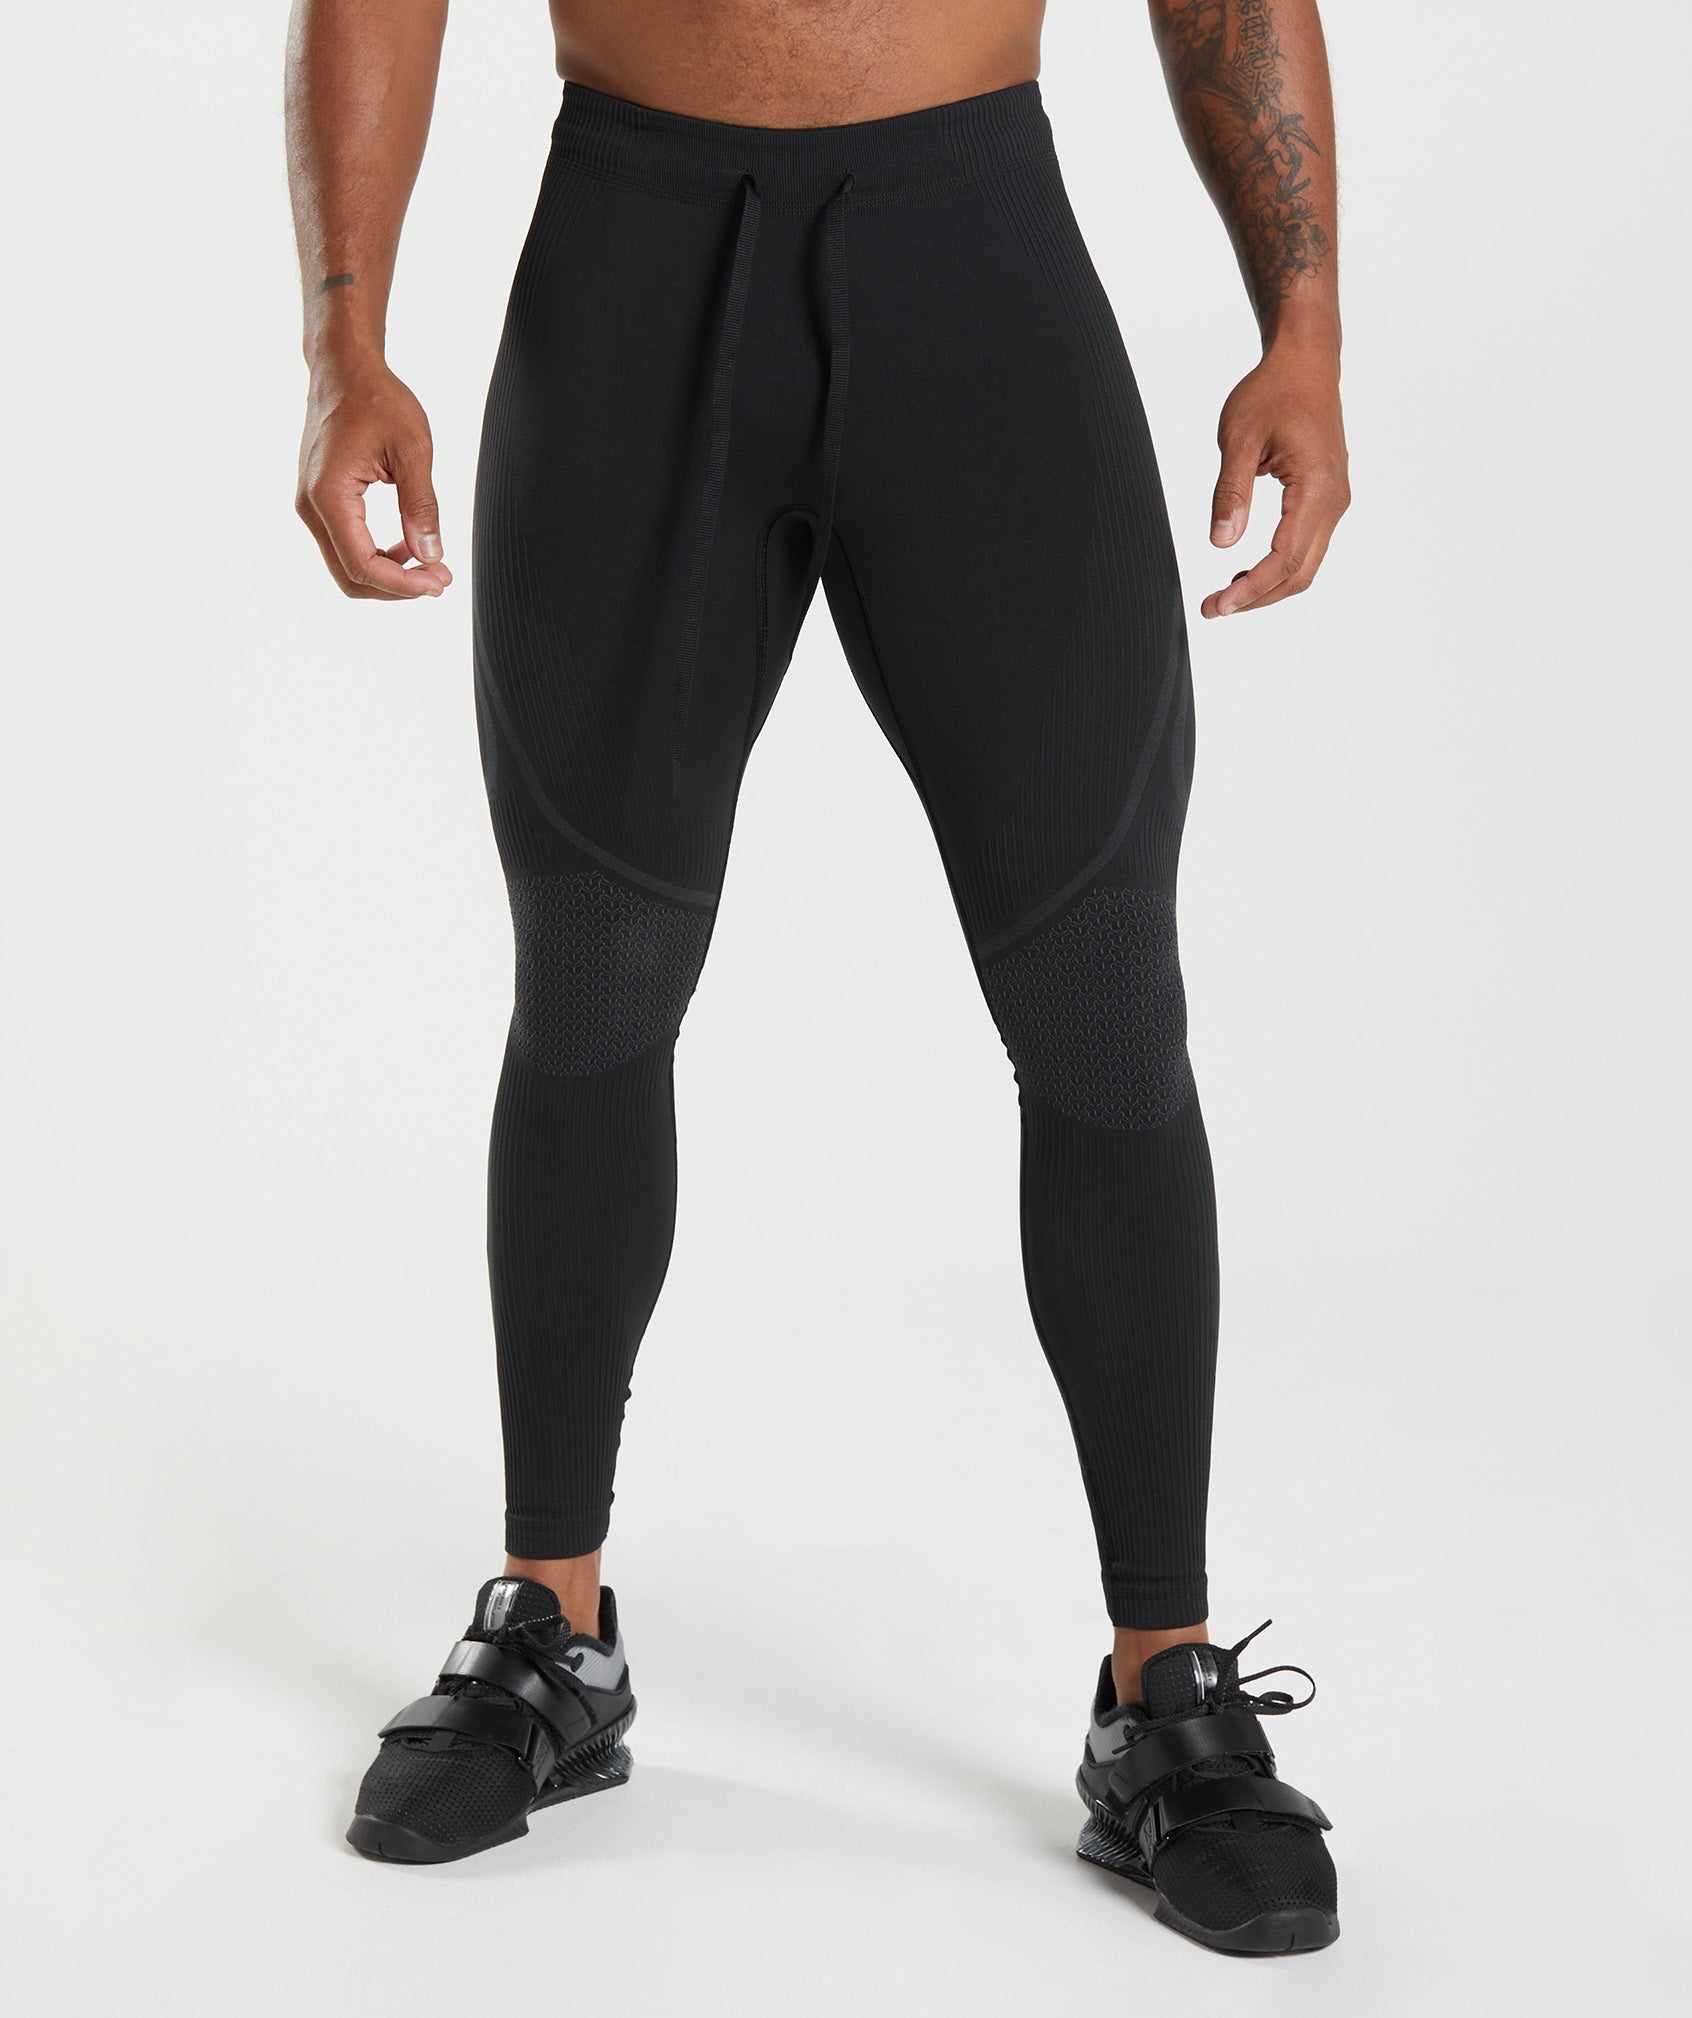 Gymshark Element Baselayer Leggings - White  Skin model, Base layer  clothing, Workout leggings